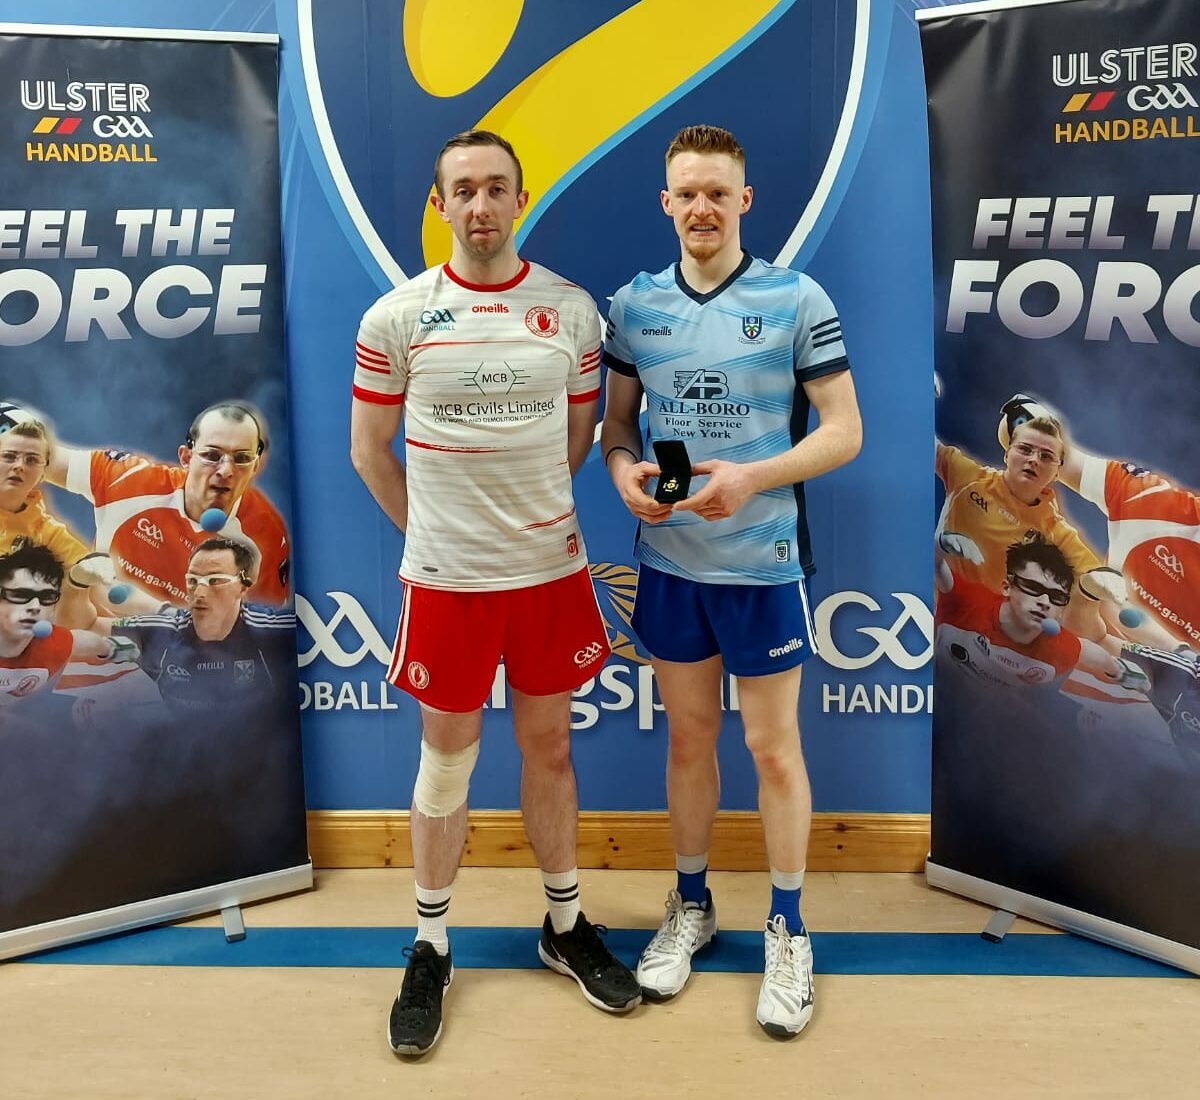 Ulster 4-Wall Handball Titles for Coyle, O’Rourke, Cassidy & Treanor